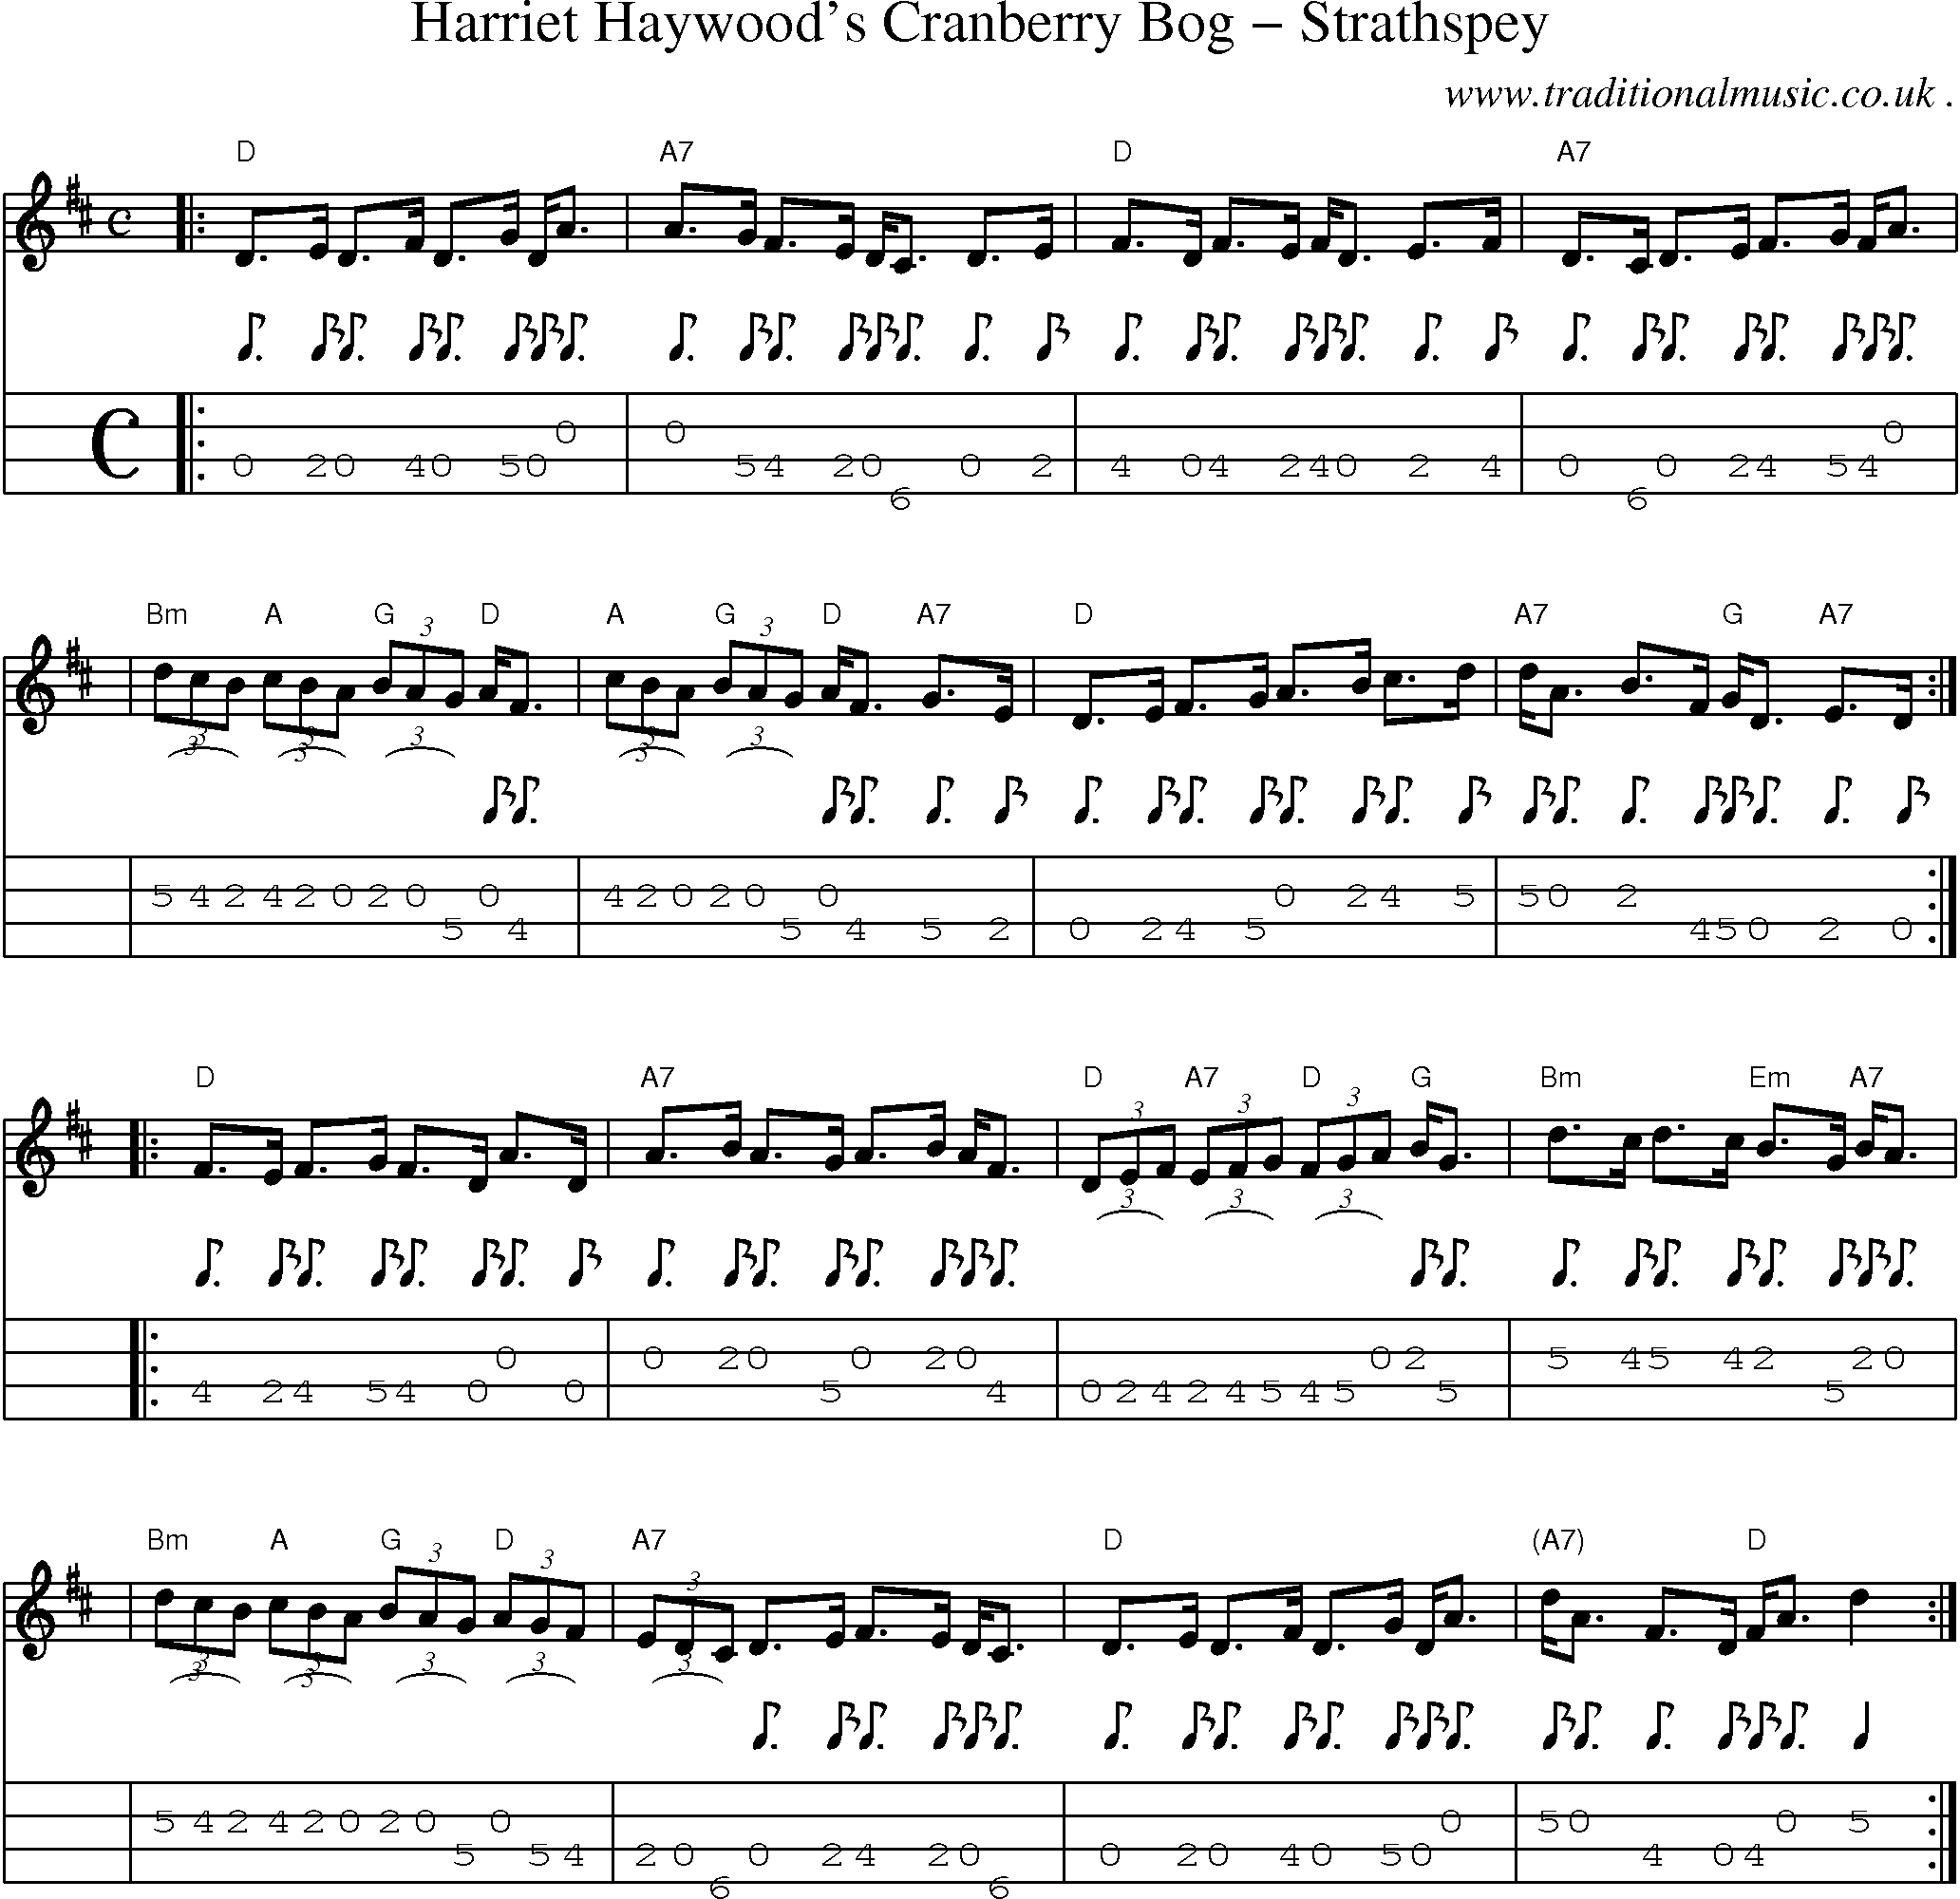 Sheet-music  score, Chords and Mandolin Tabs for Harriet Haywoods Cranberry Bog Strathspey